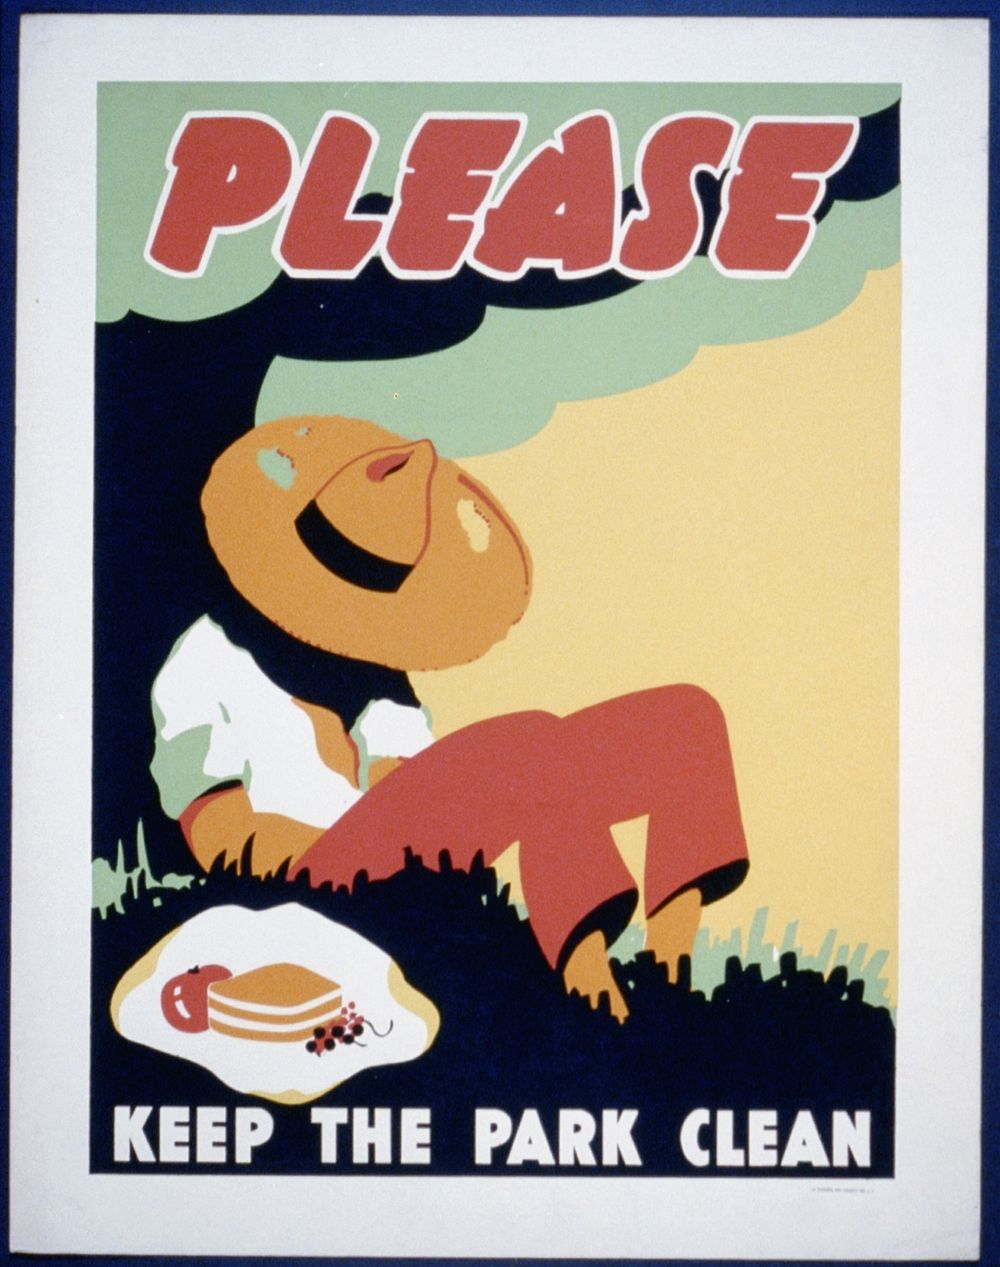 Please keep the park clean